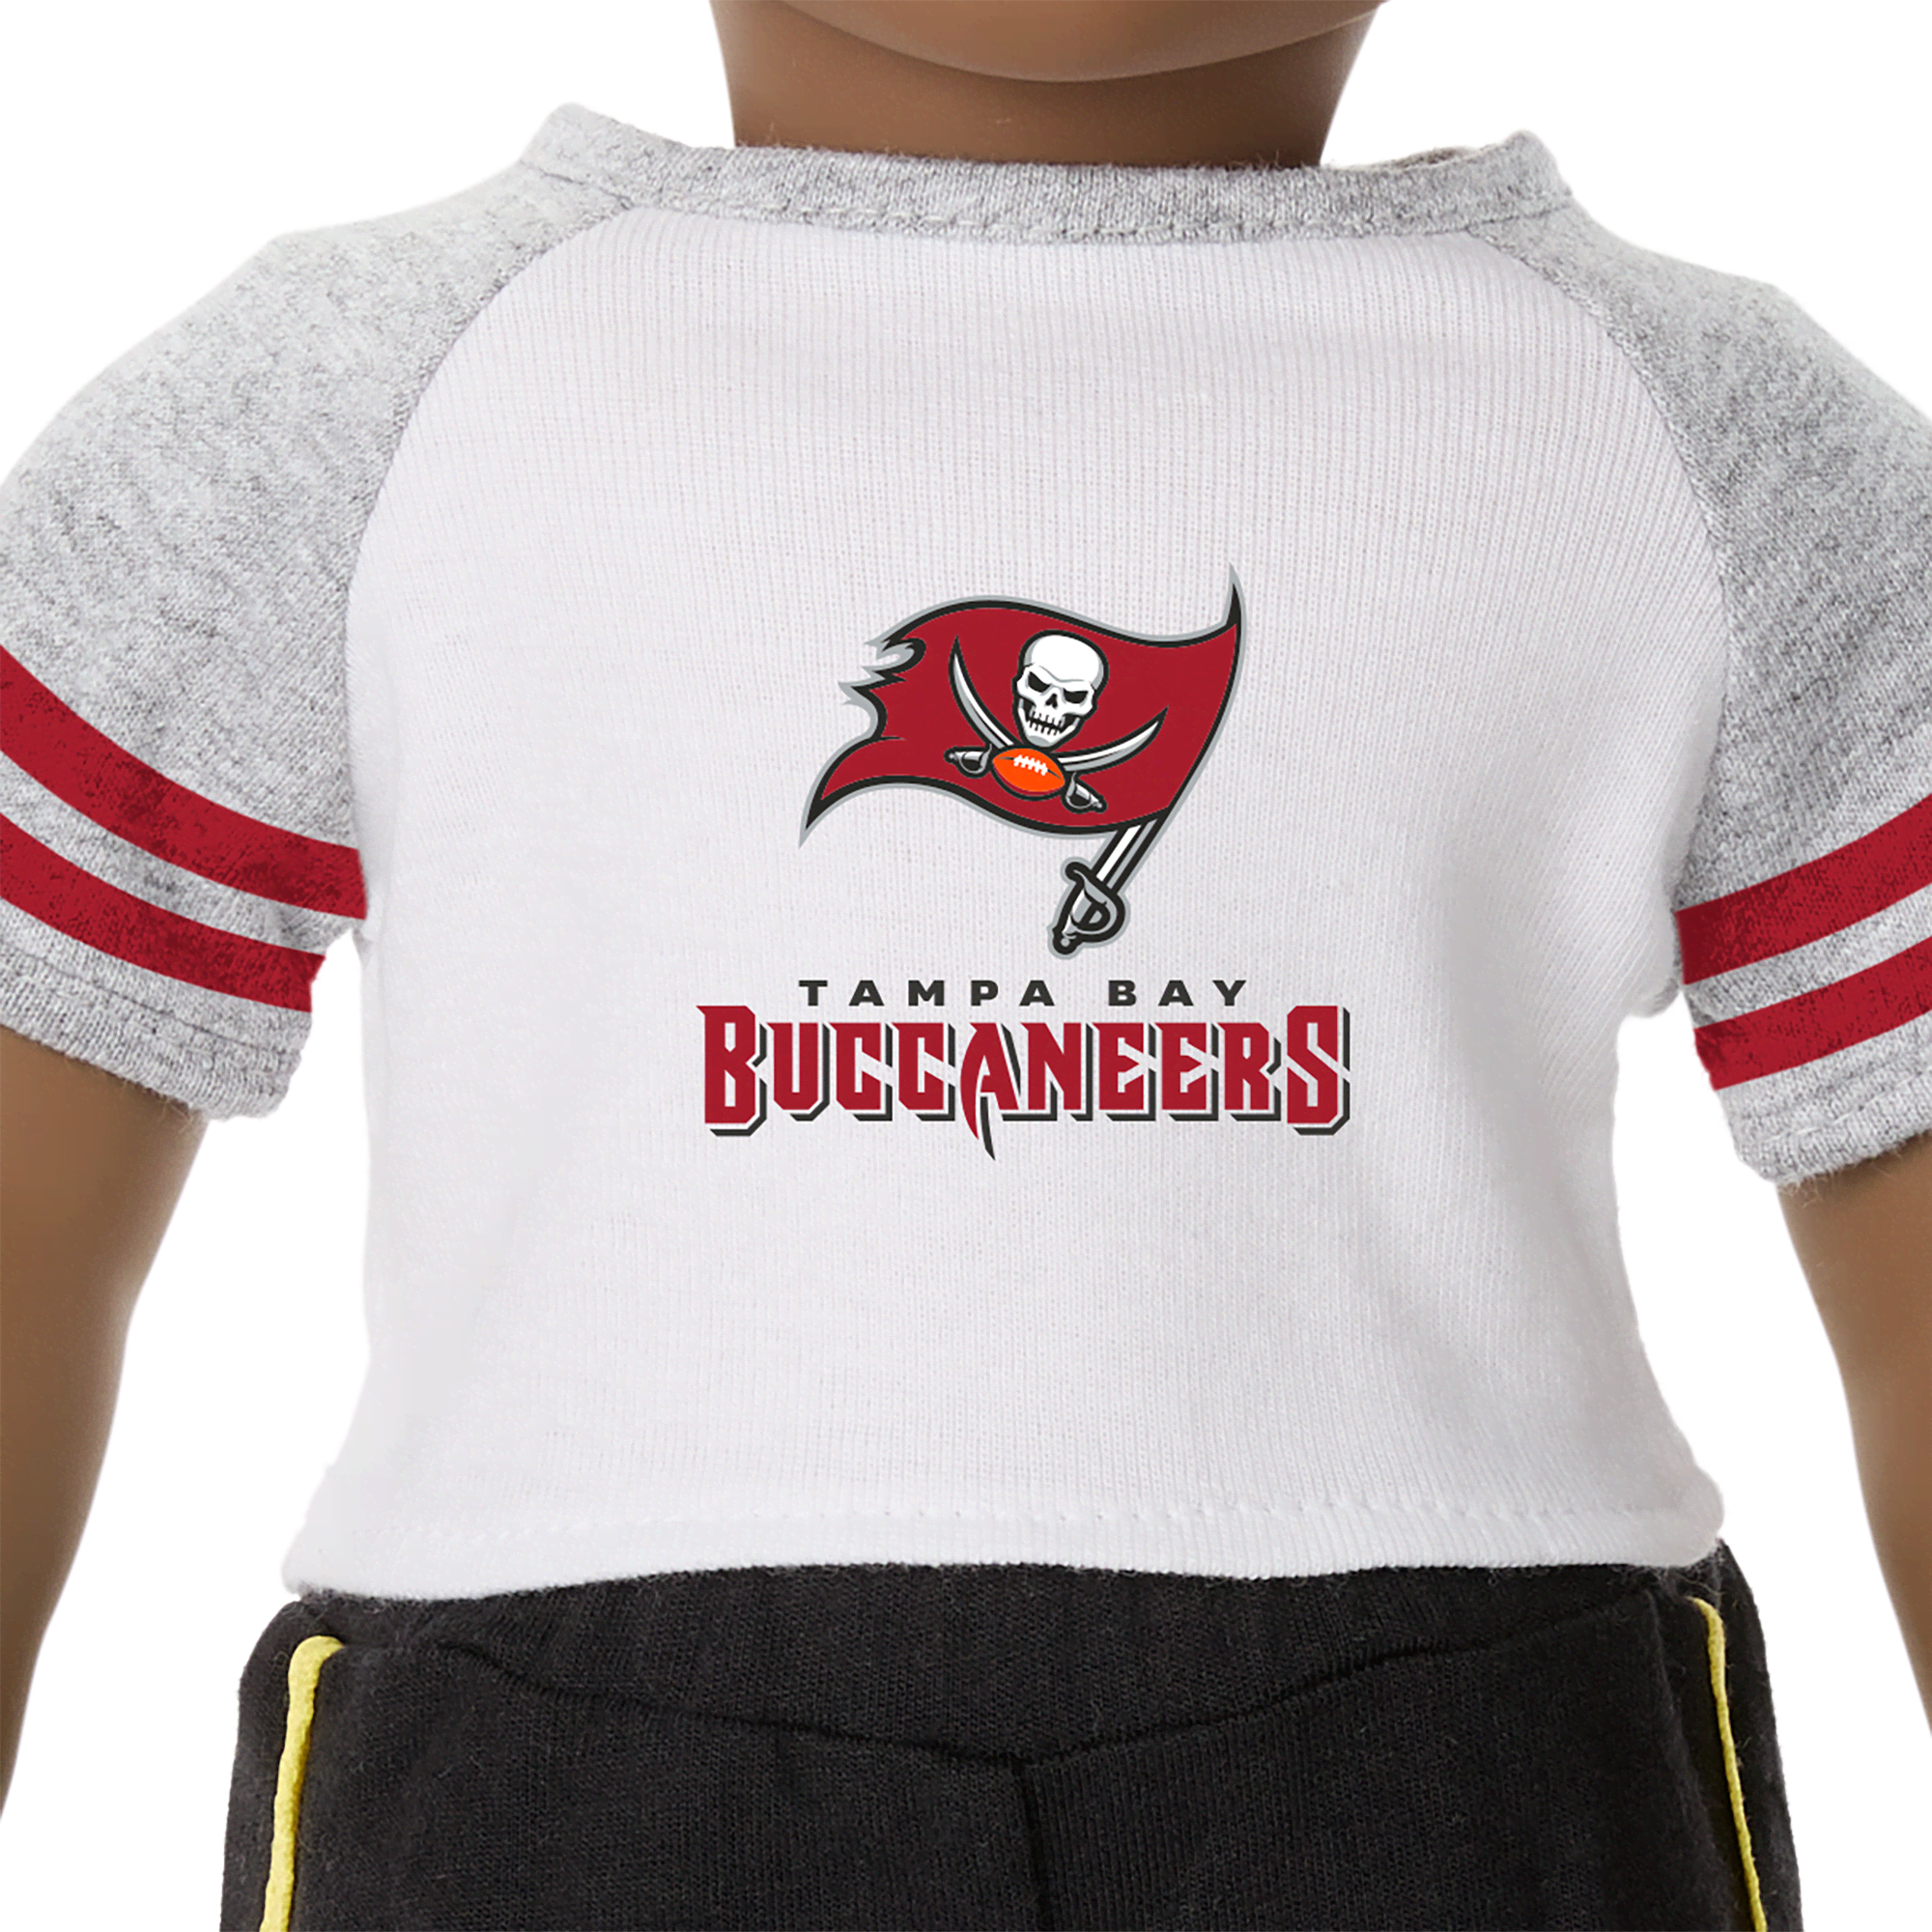 American Girl® x NFL Tampa Bay Buccaneers Fan Tee for 18-inch Dolls